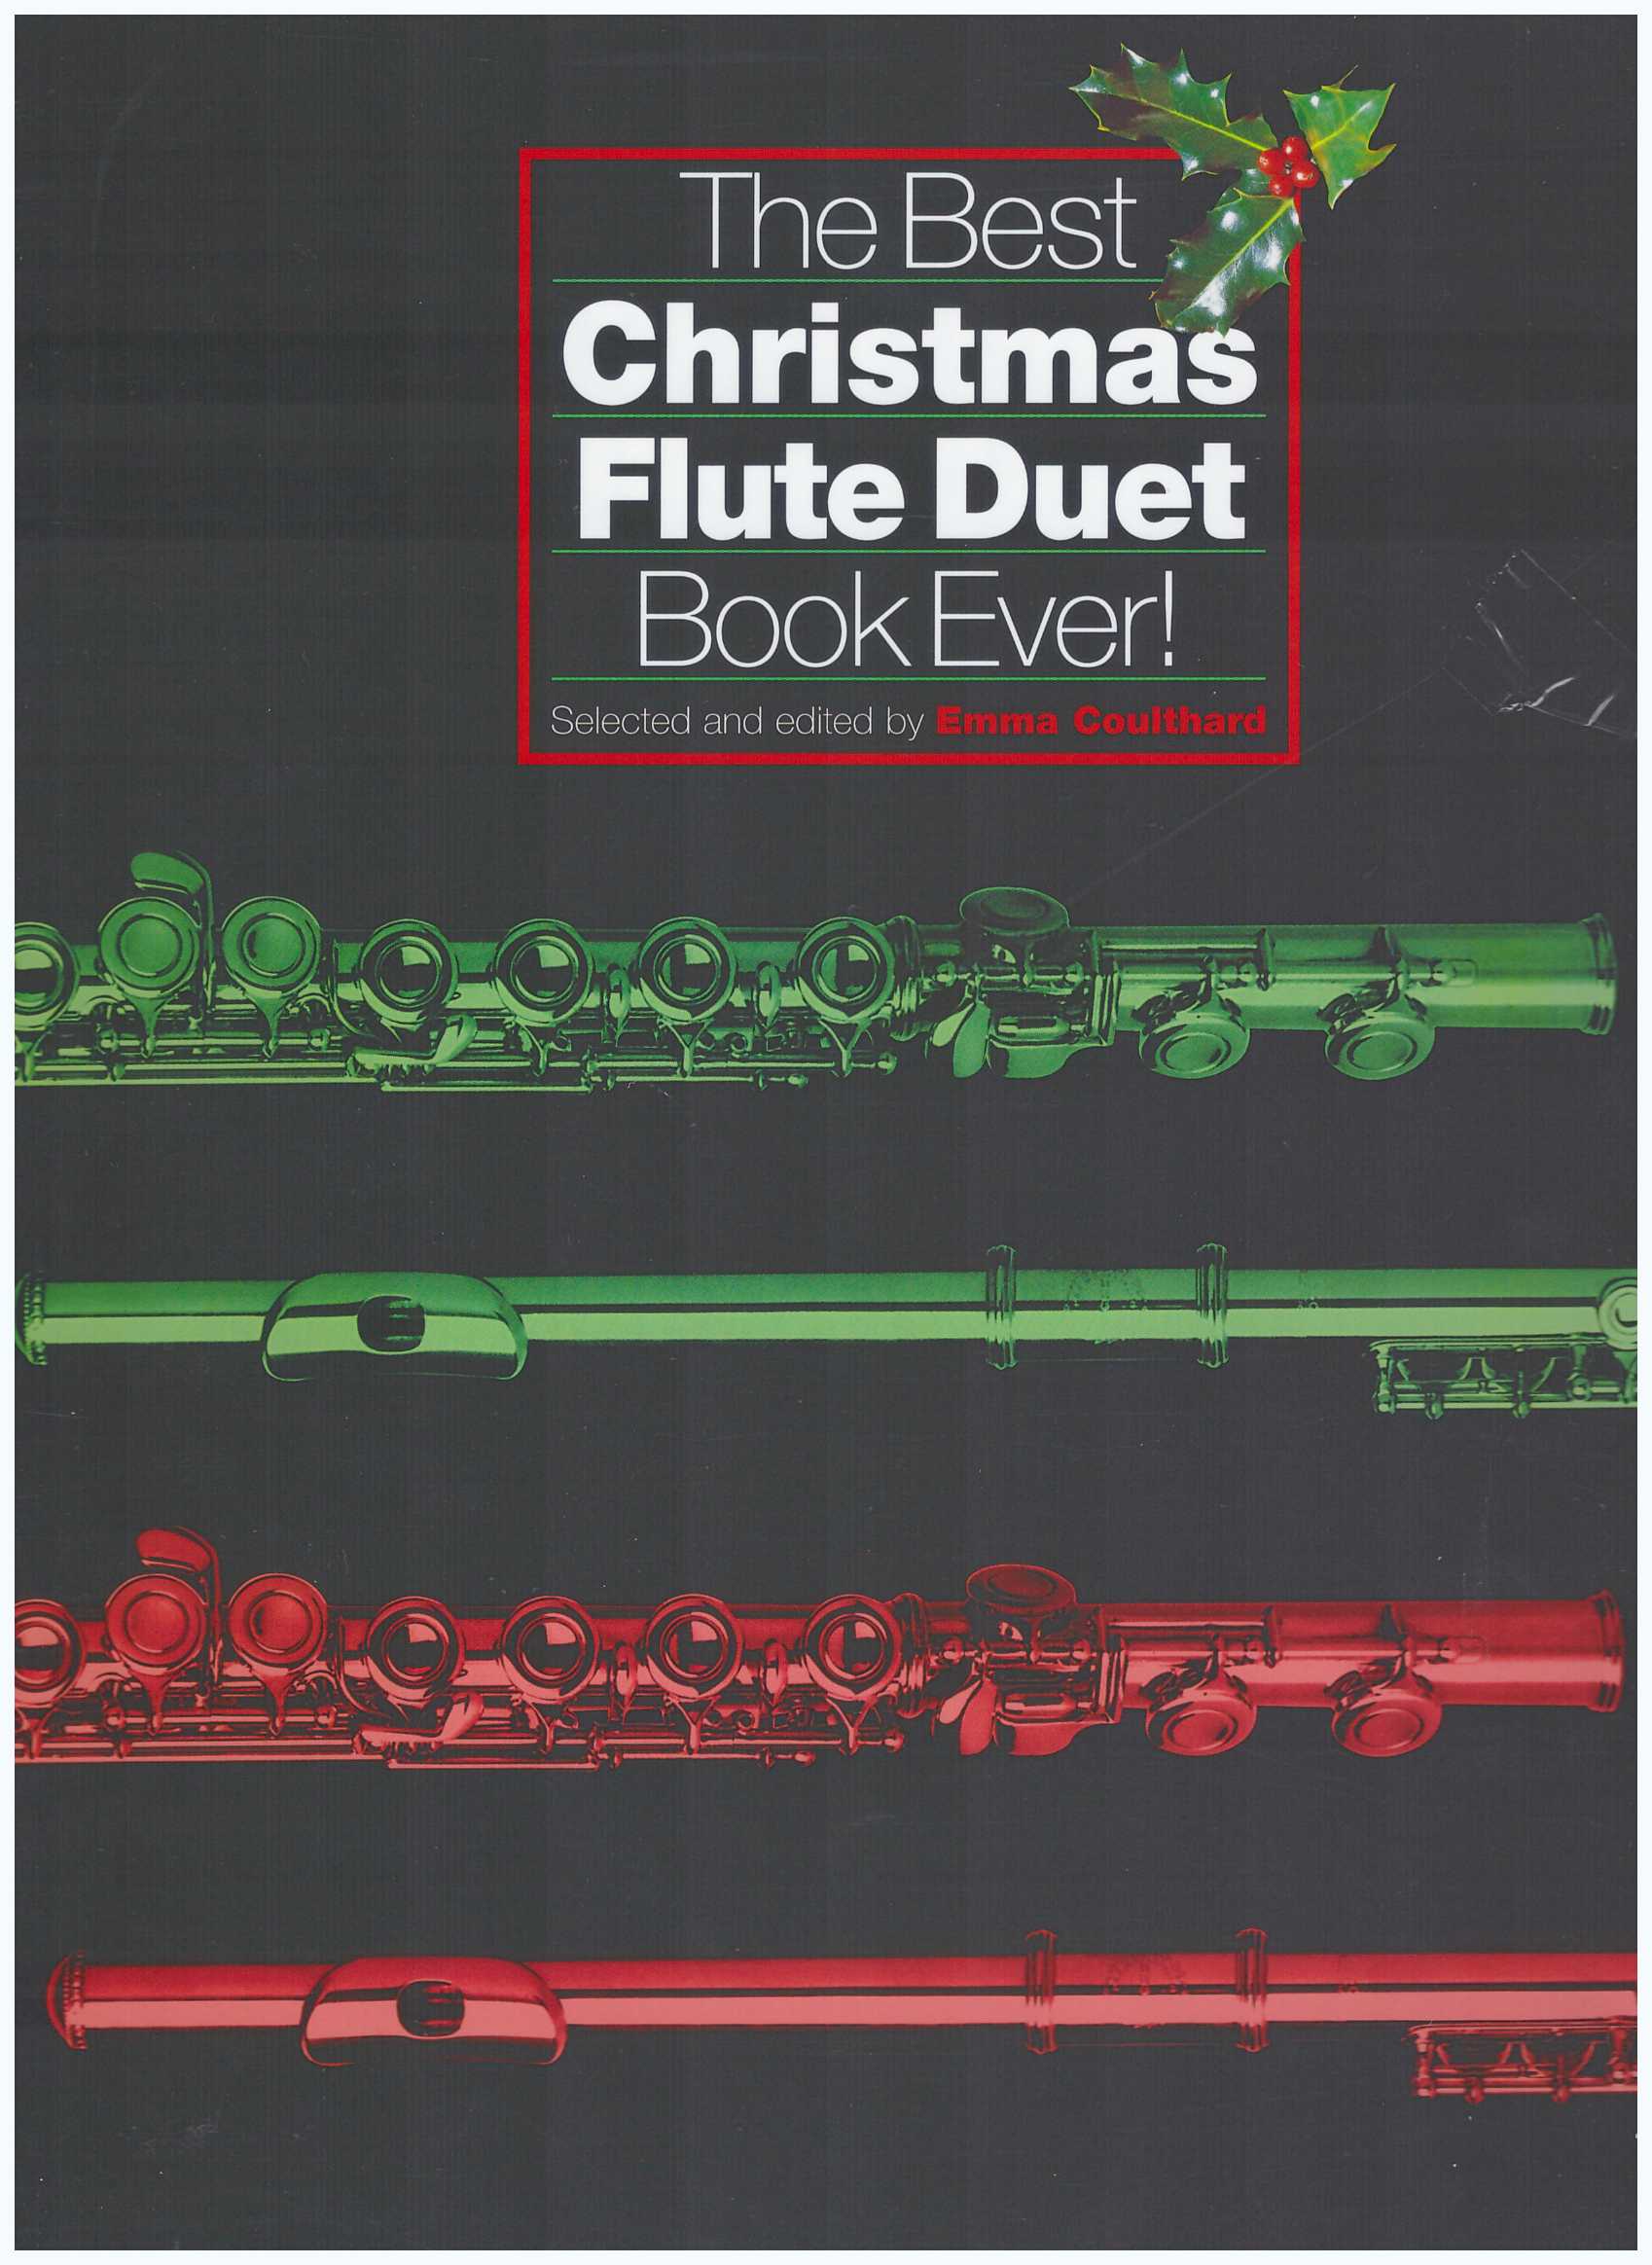 The Best Christmas Flute Duet book Ever / Flute Book